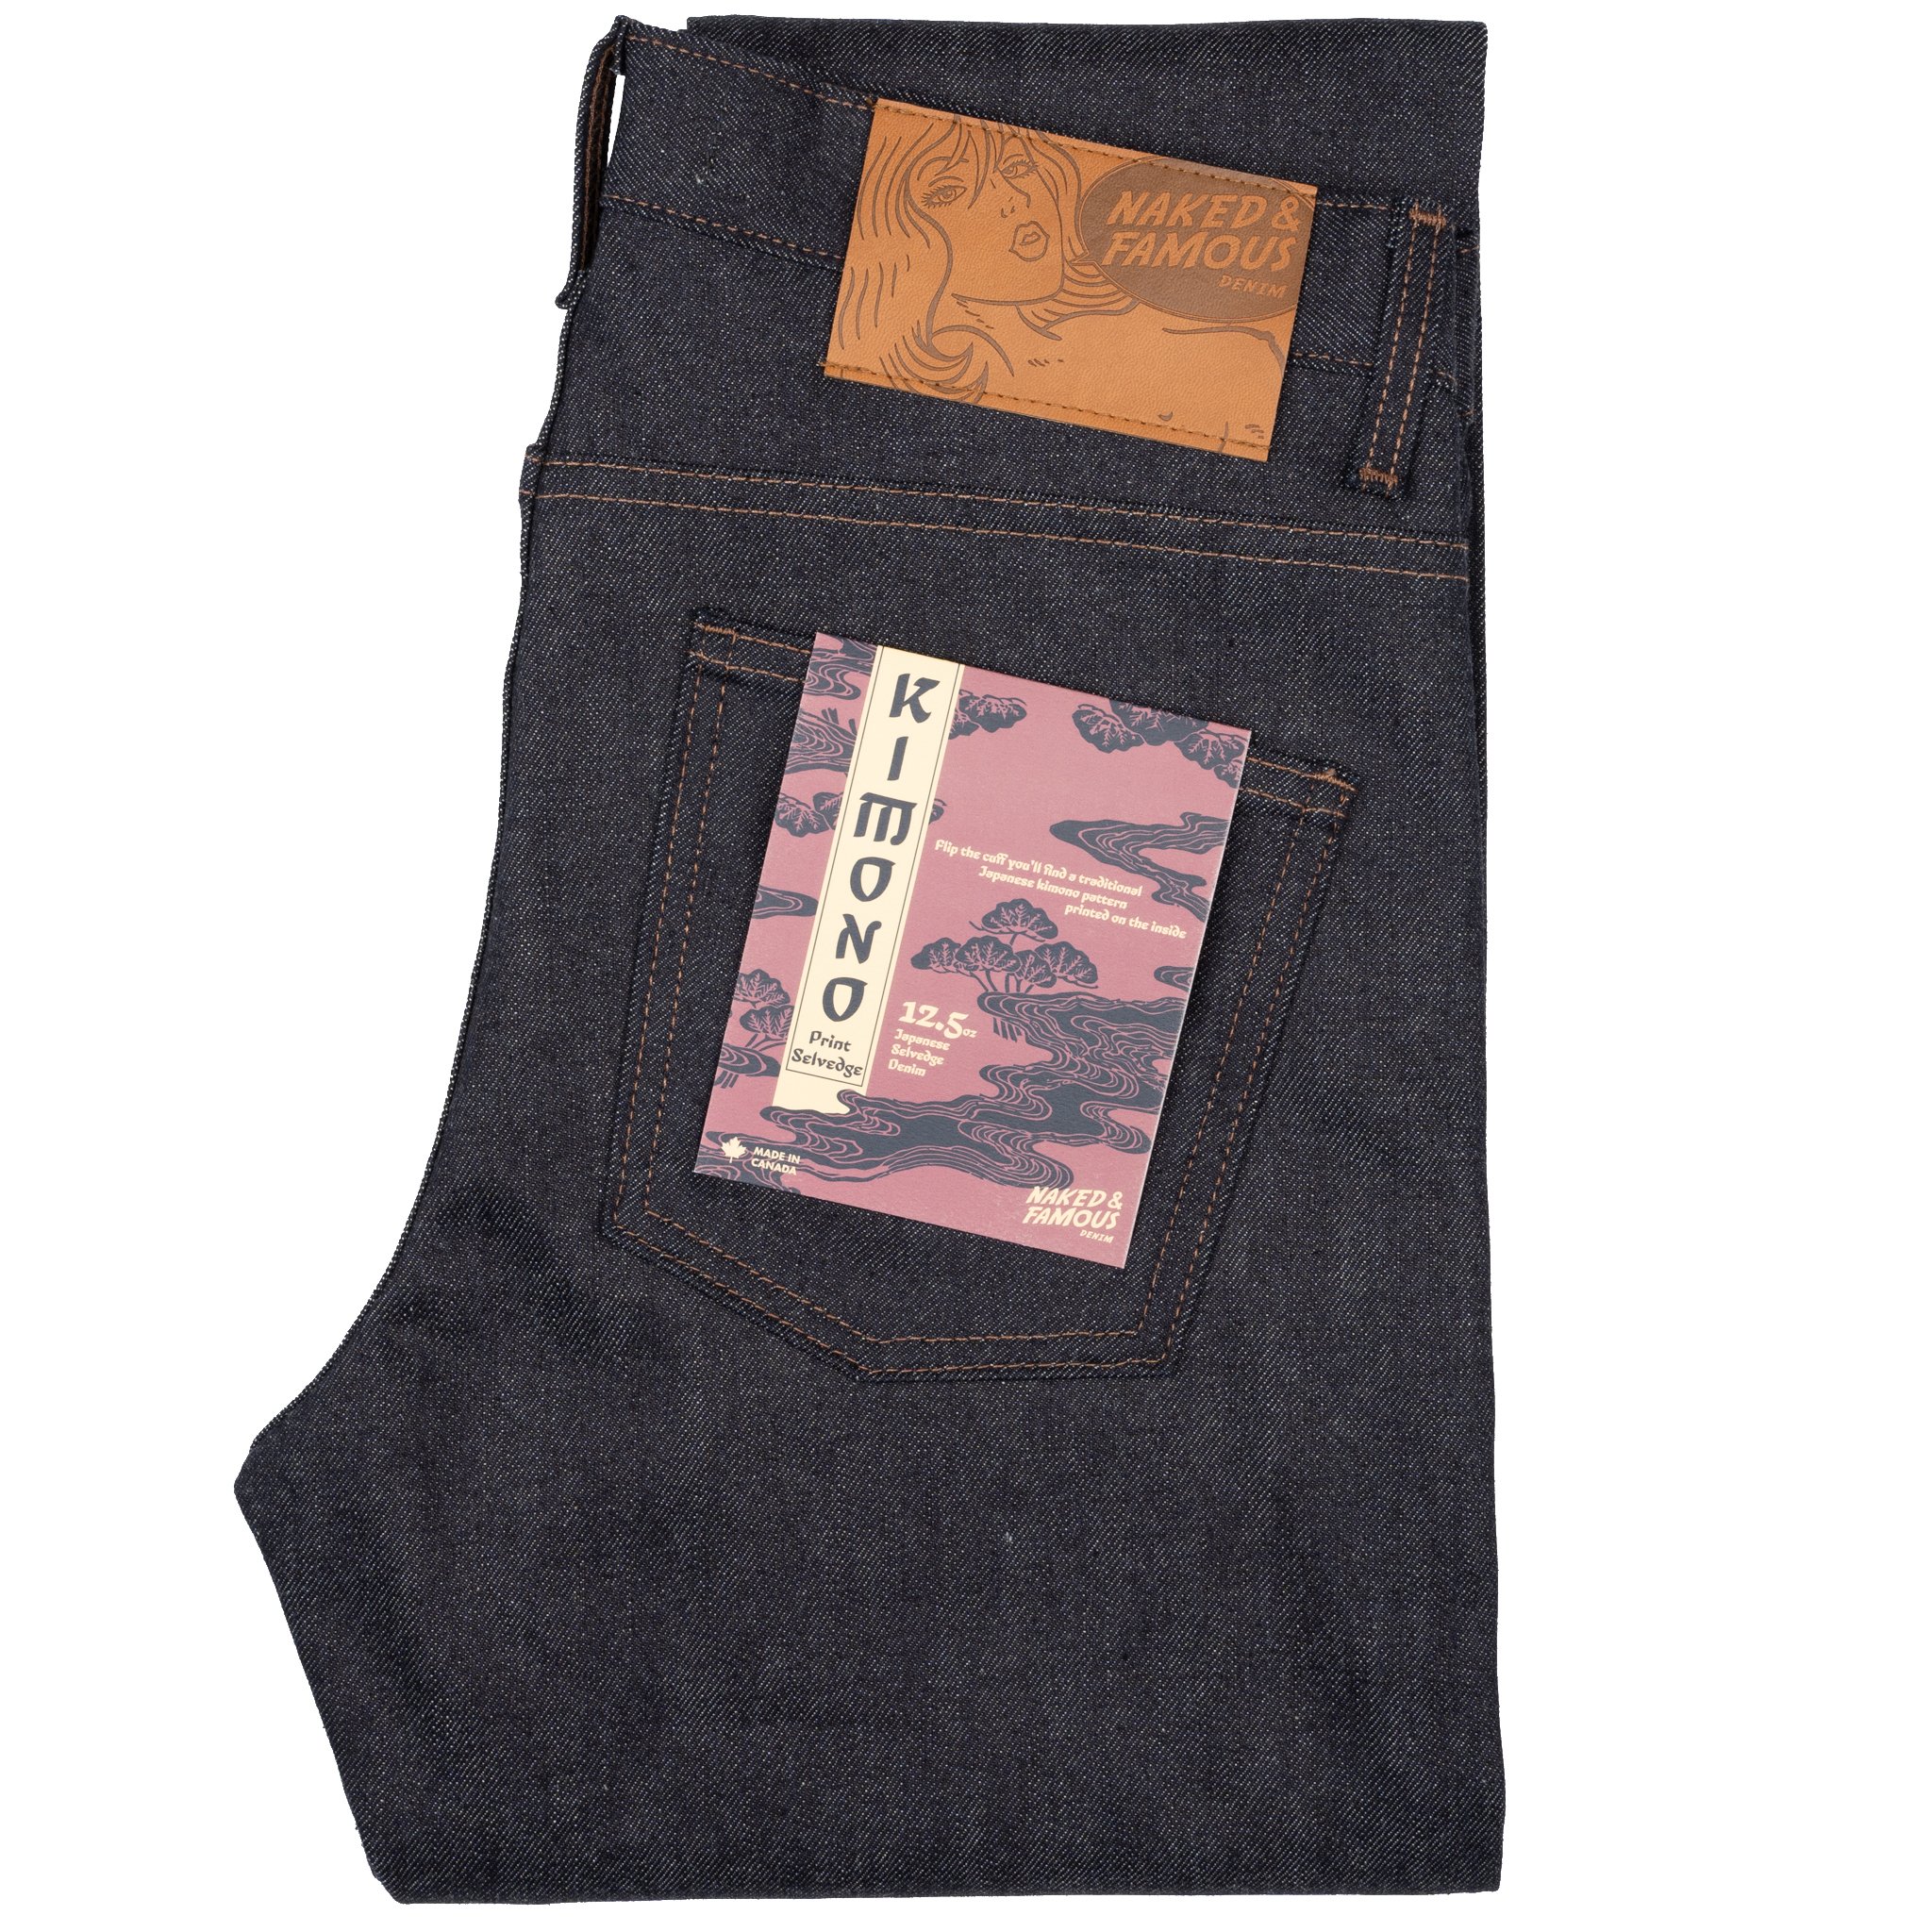  Kimono Print Selvedge - Jeans 